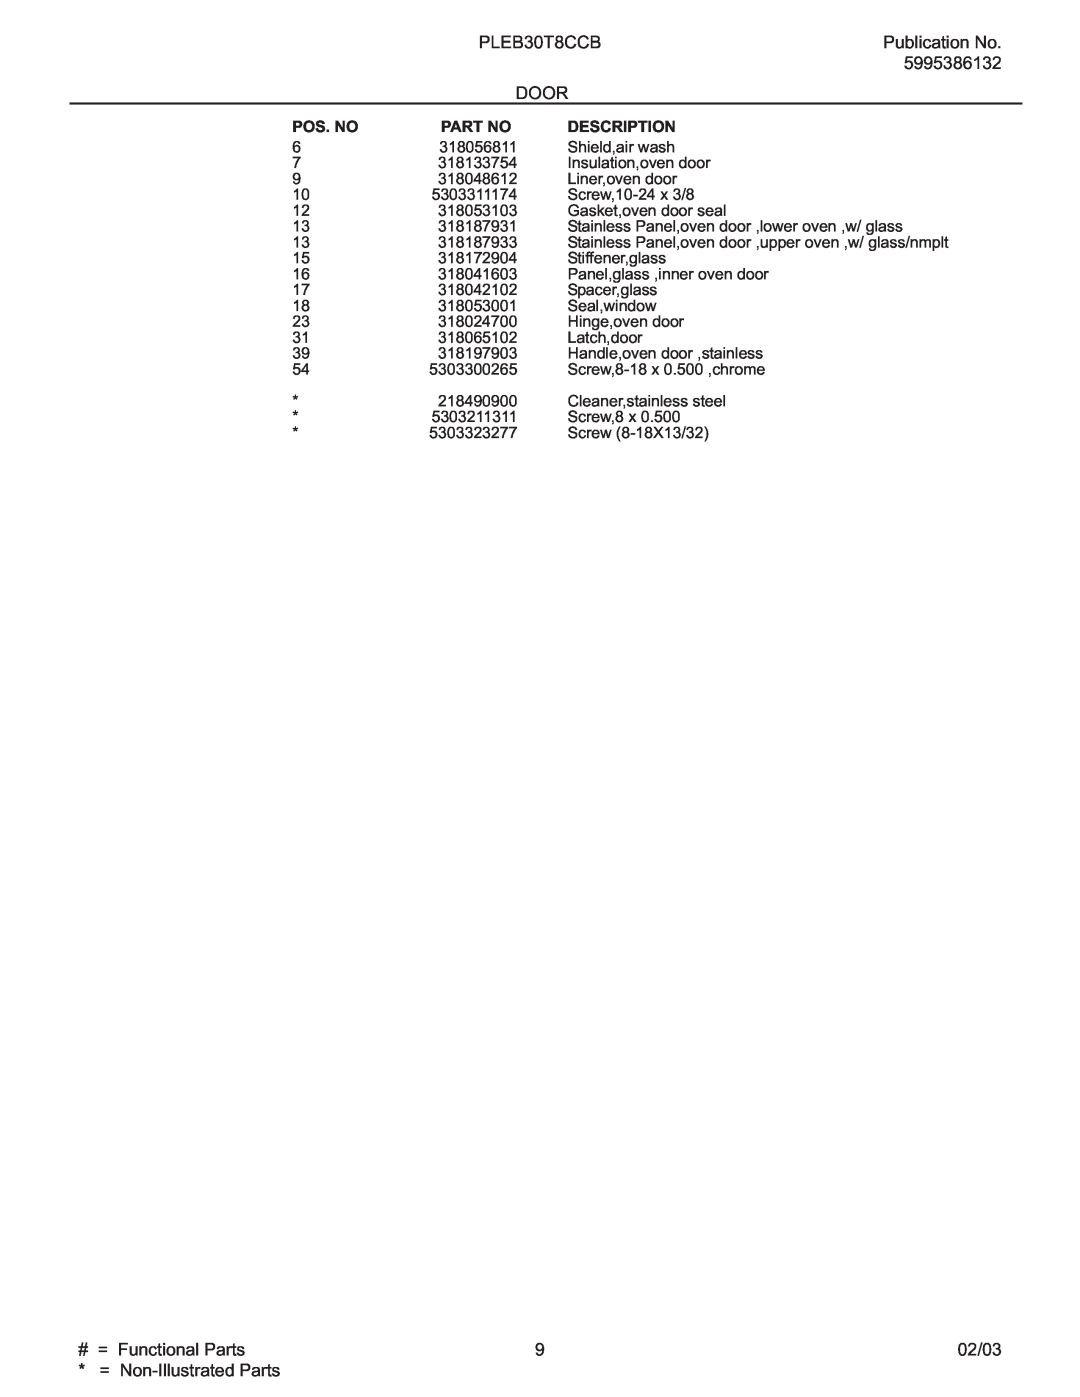 Electrolux instruction sheet PLEB30T8CCB 